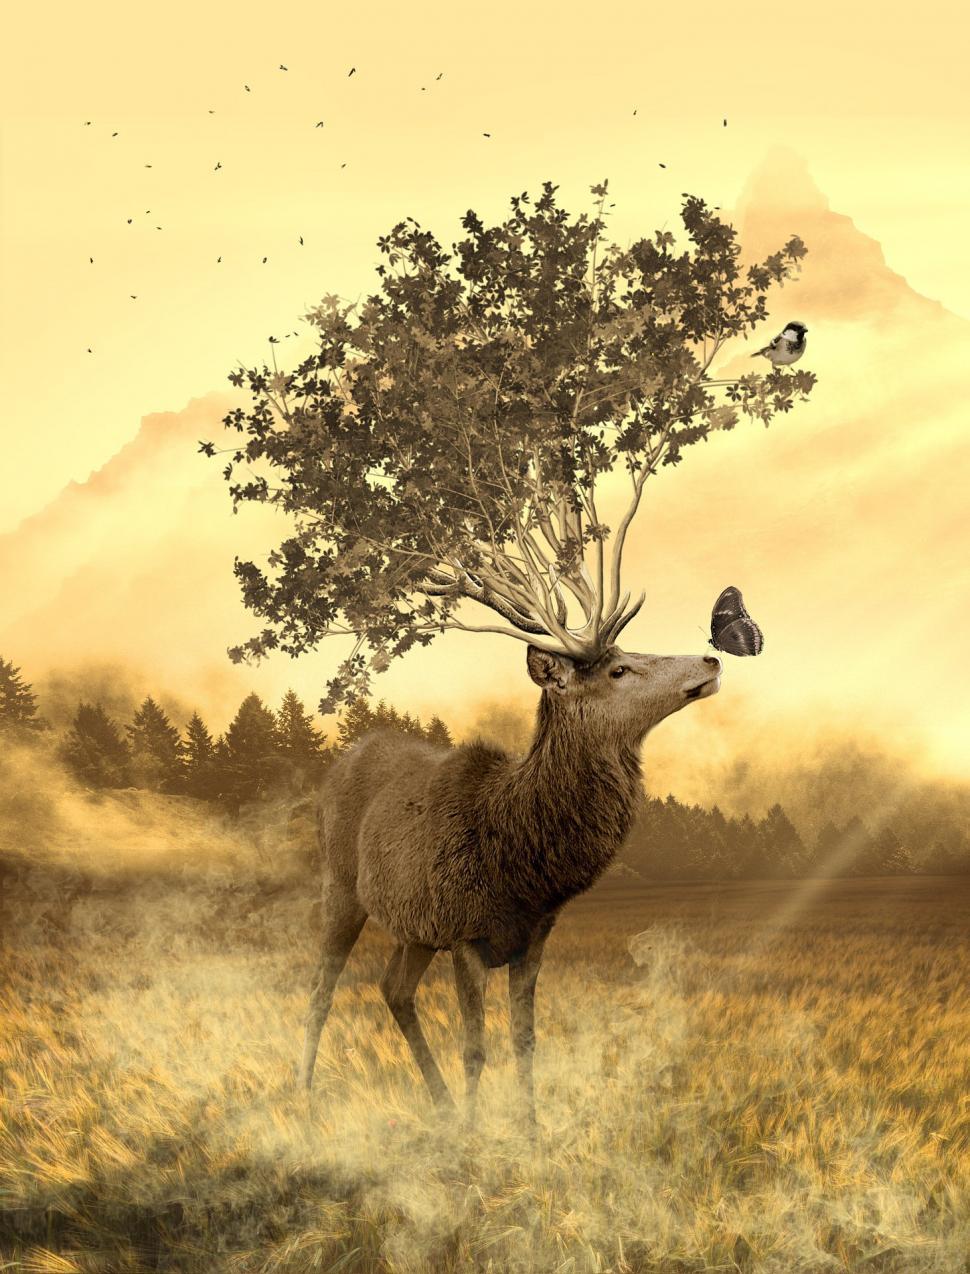 Free Image of Deer With Tree on Head 